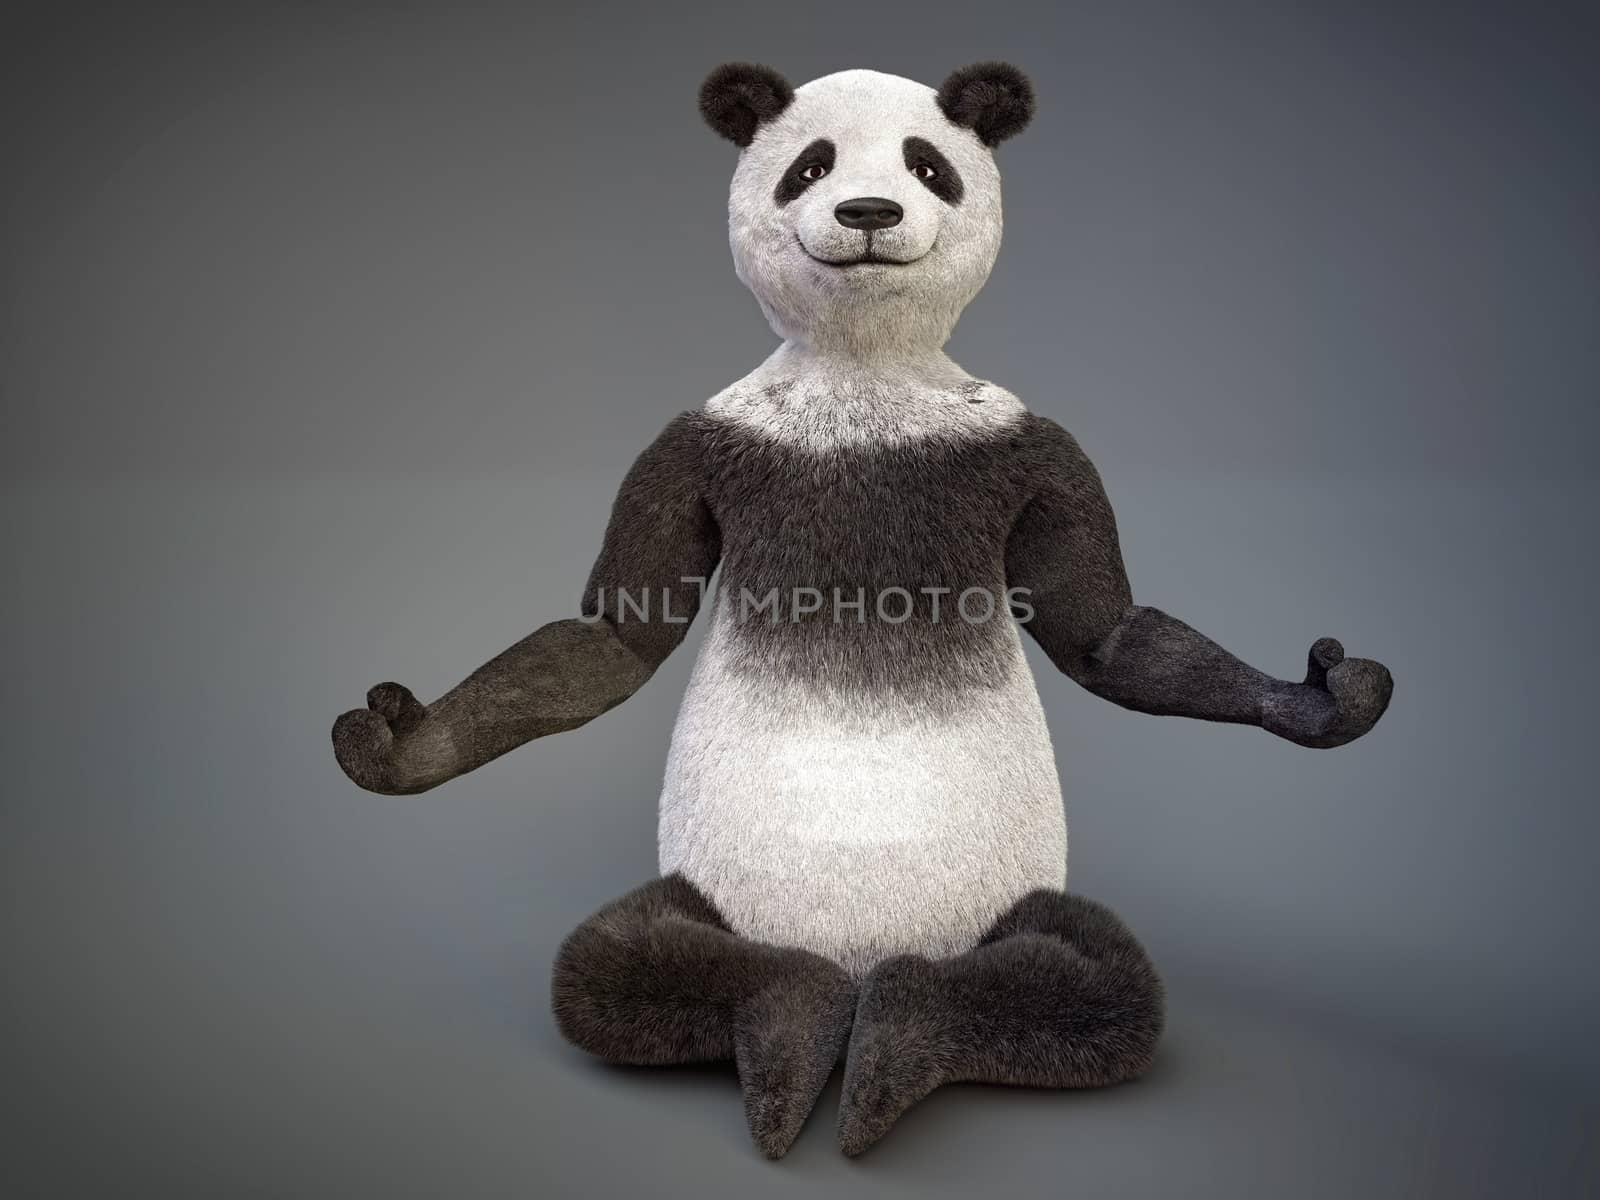 Personage character animal bear panda sat lotus pose meditation by xtate